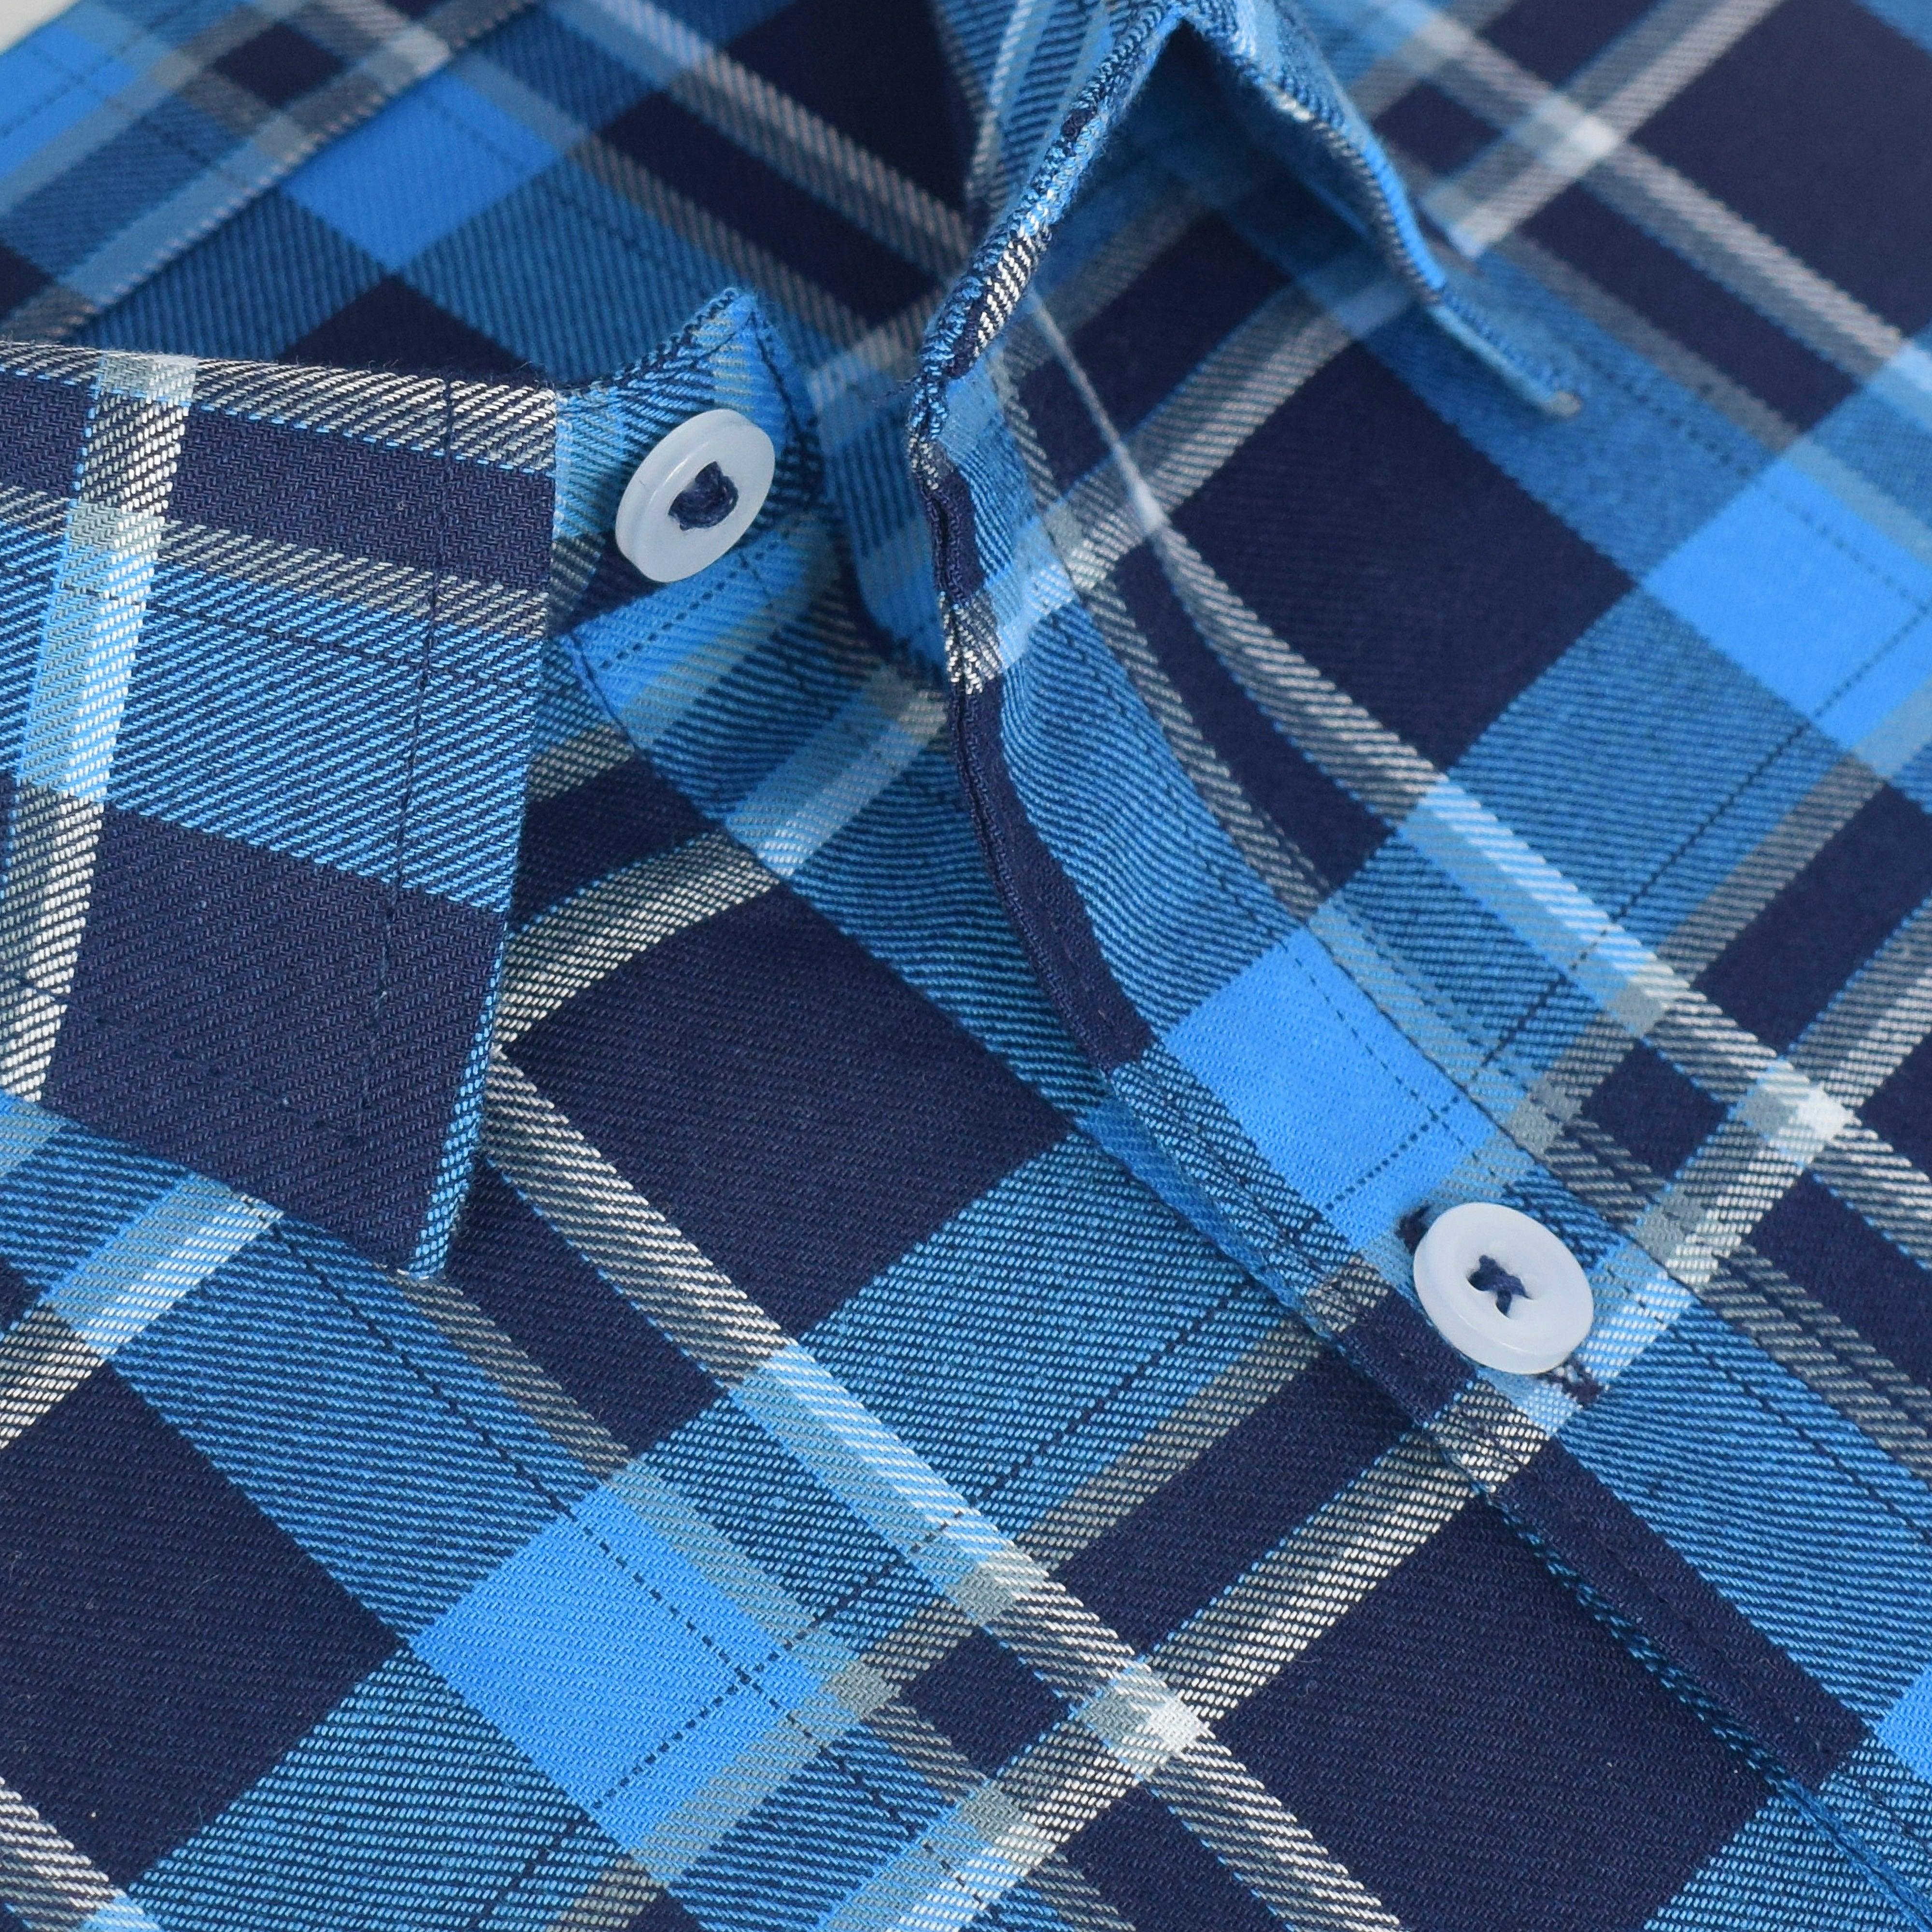 Men's 100% Cotton Windowpane Checkered Half Sleeves Shirt (Blue)